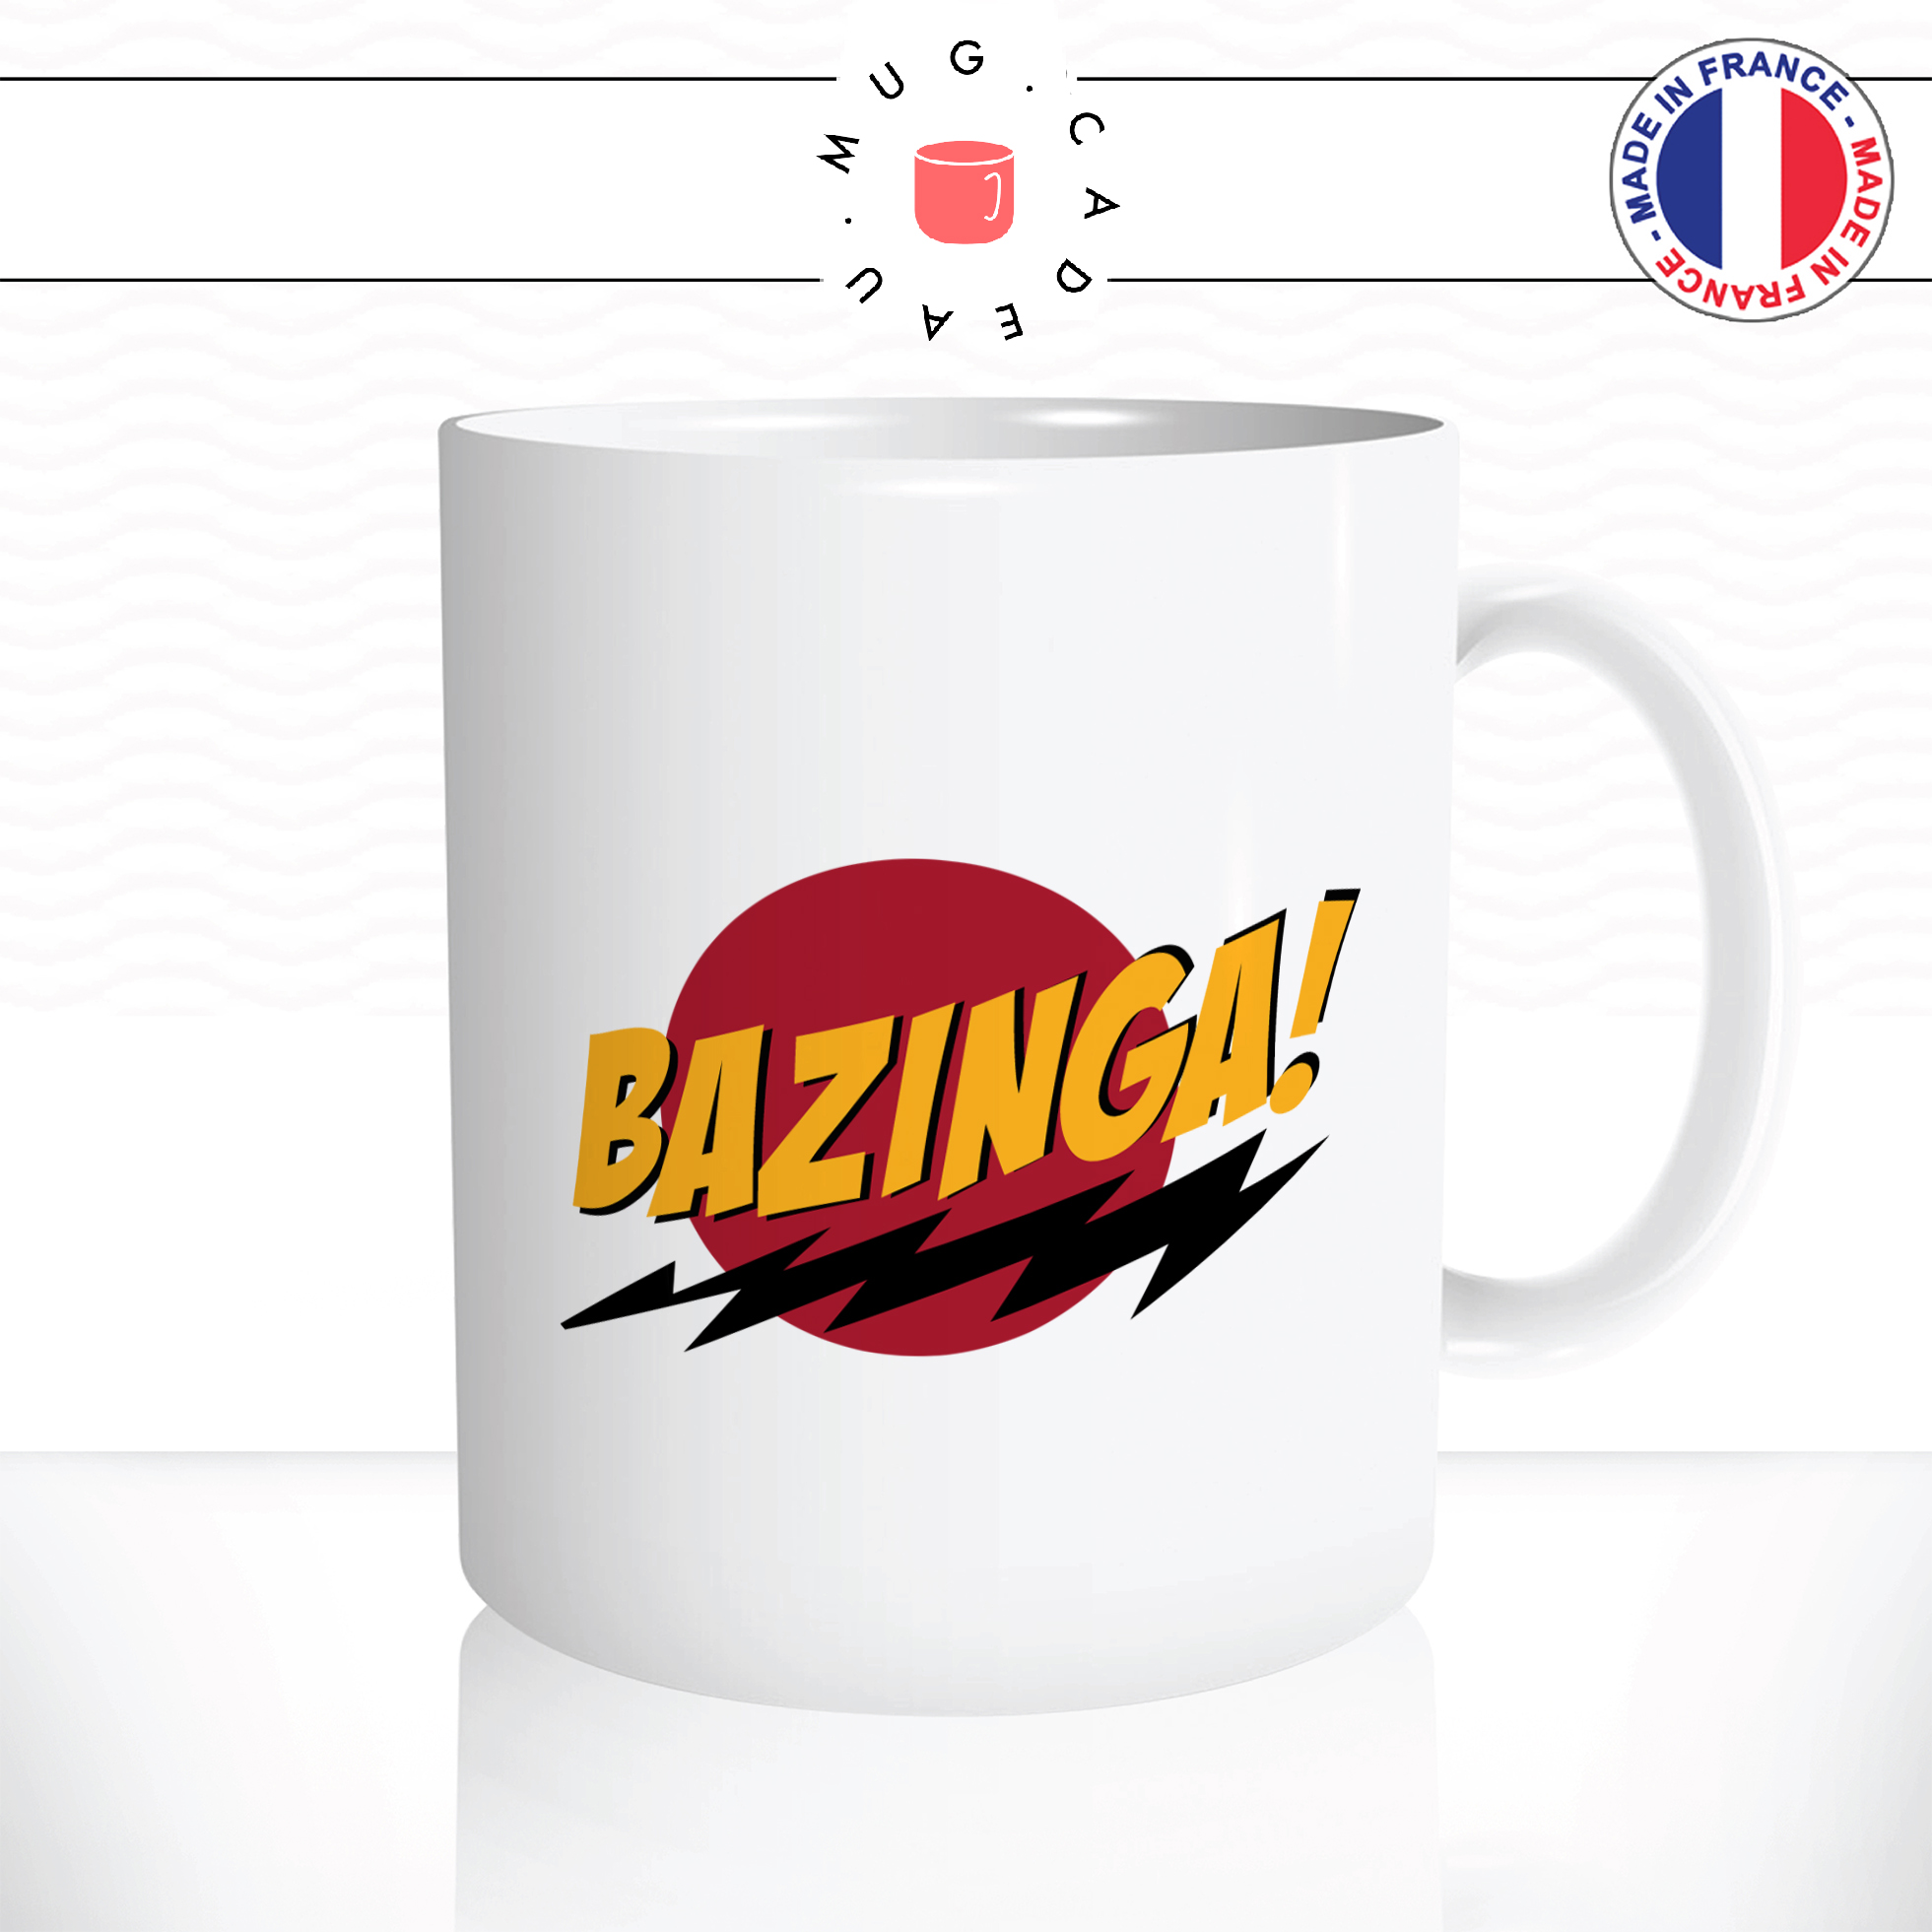 mug-tasse-ref3-big-bang-theorie-serie-bazinga-logo-cafe-the-mugs-tasses-personnalise-anse-droite